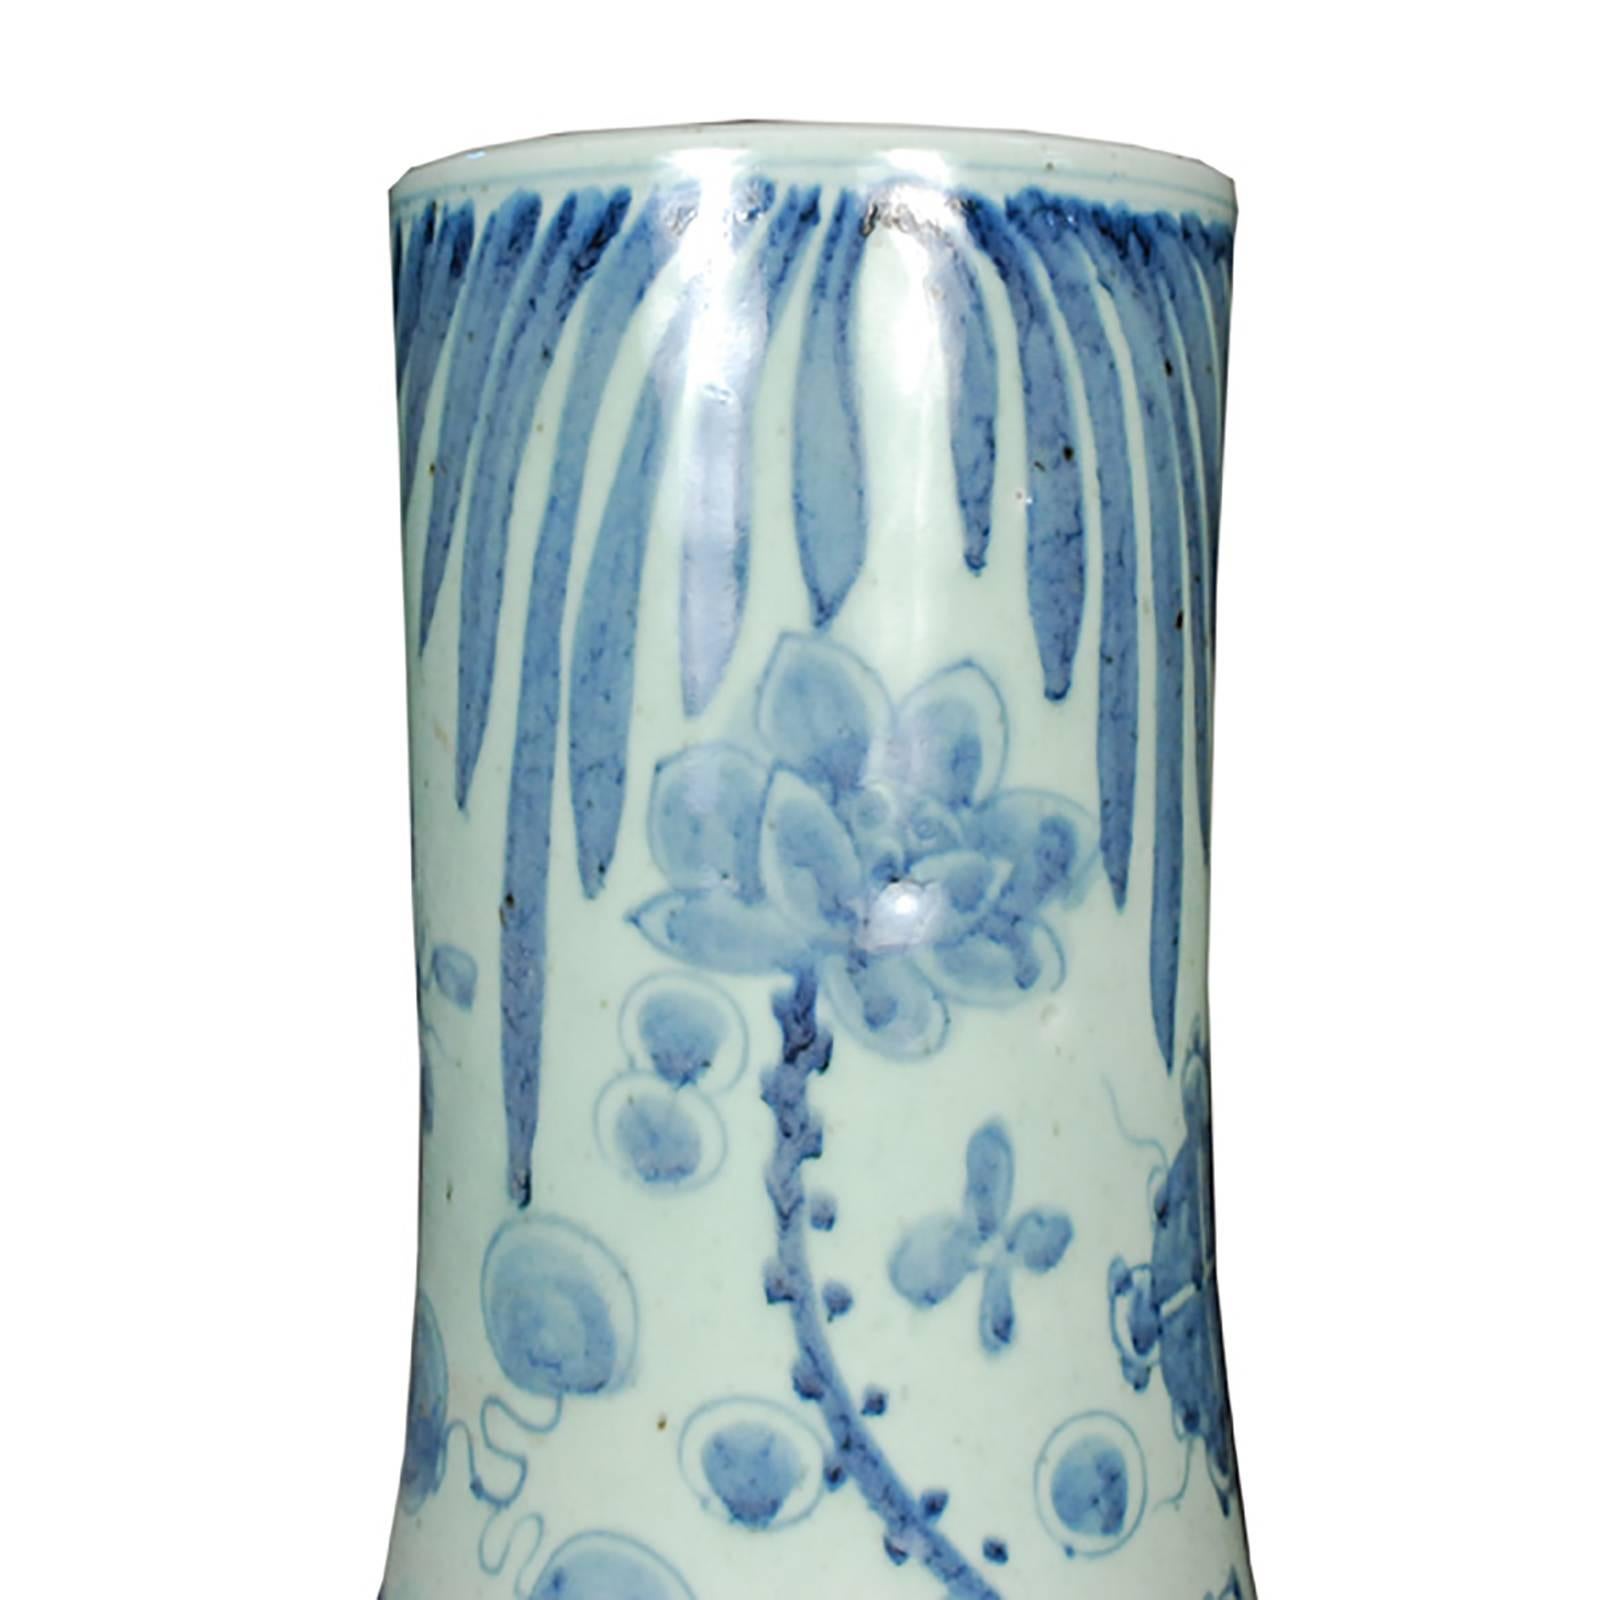 Glazed Chinese Blue and White Gooseneck Jar with Fish